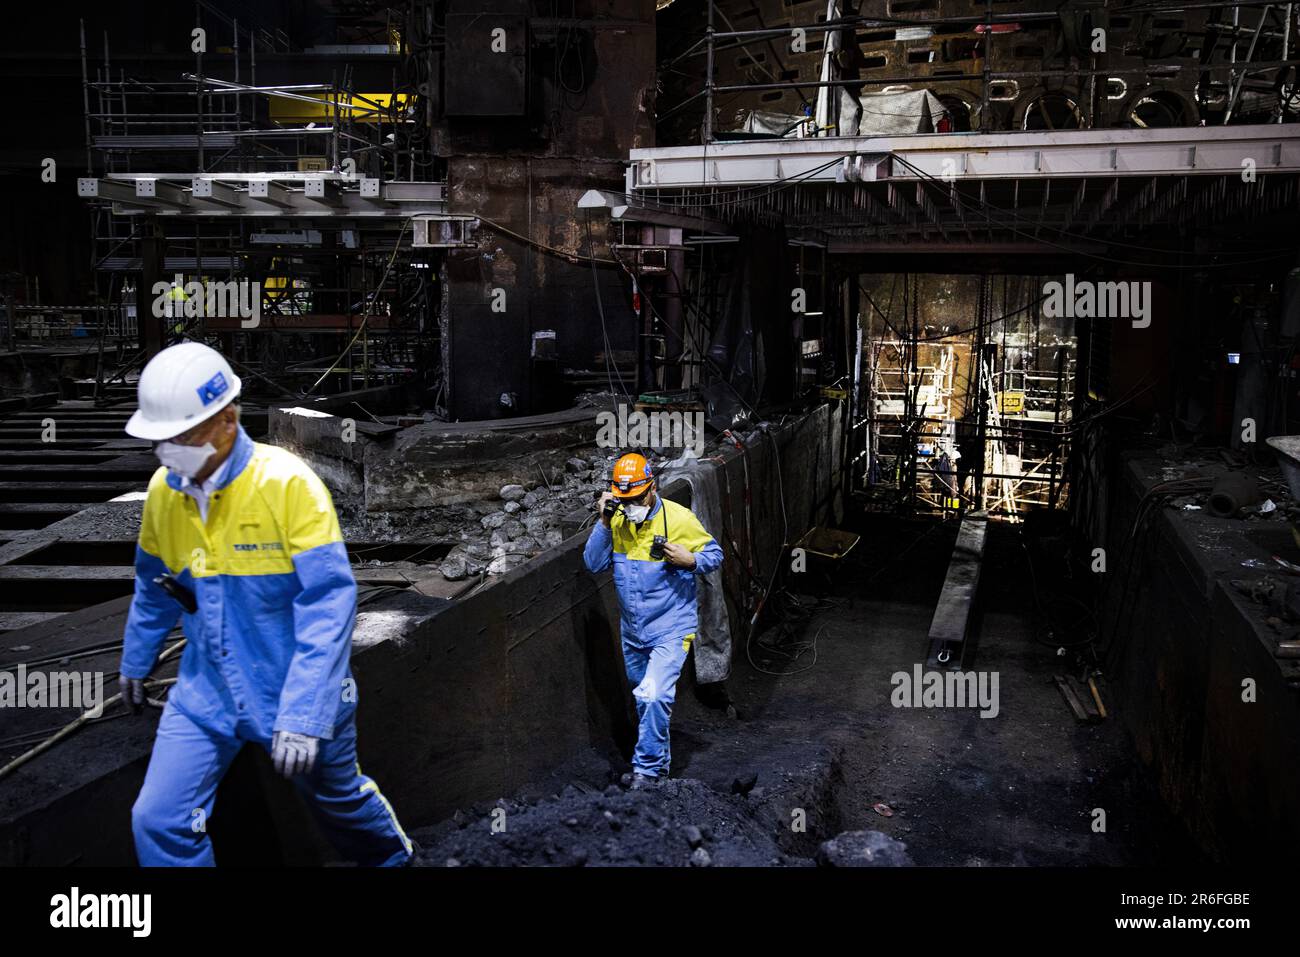 Tata Steel Nederland is modernizing the blast furnace at the Eimeiden plant  — EU steel news